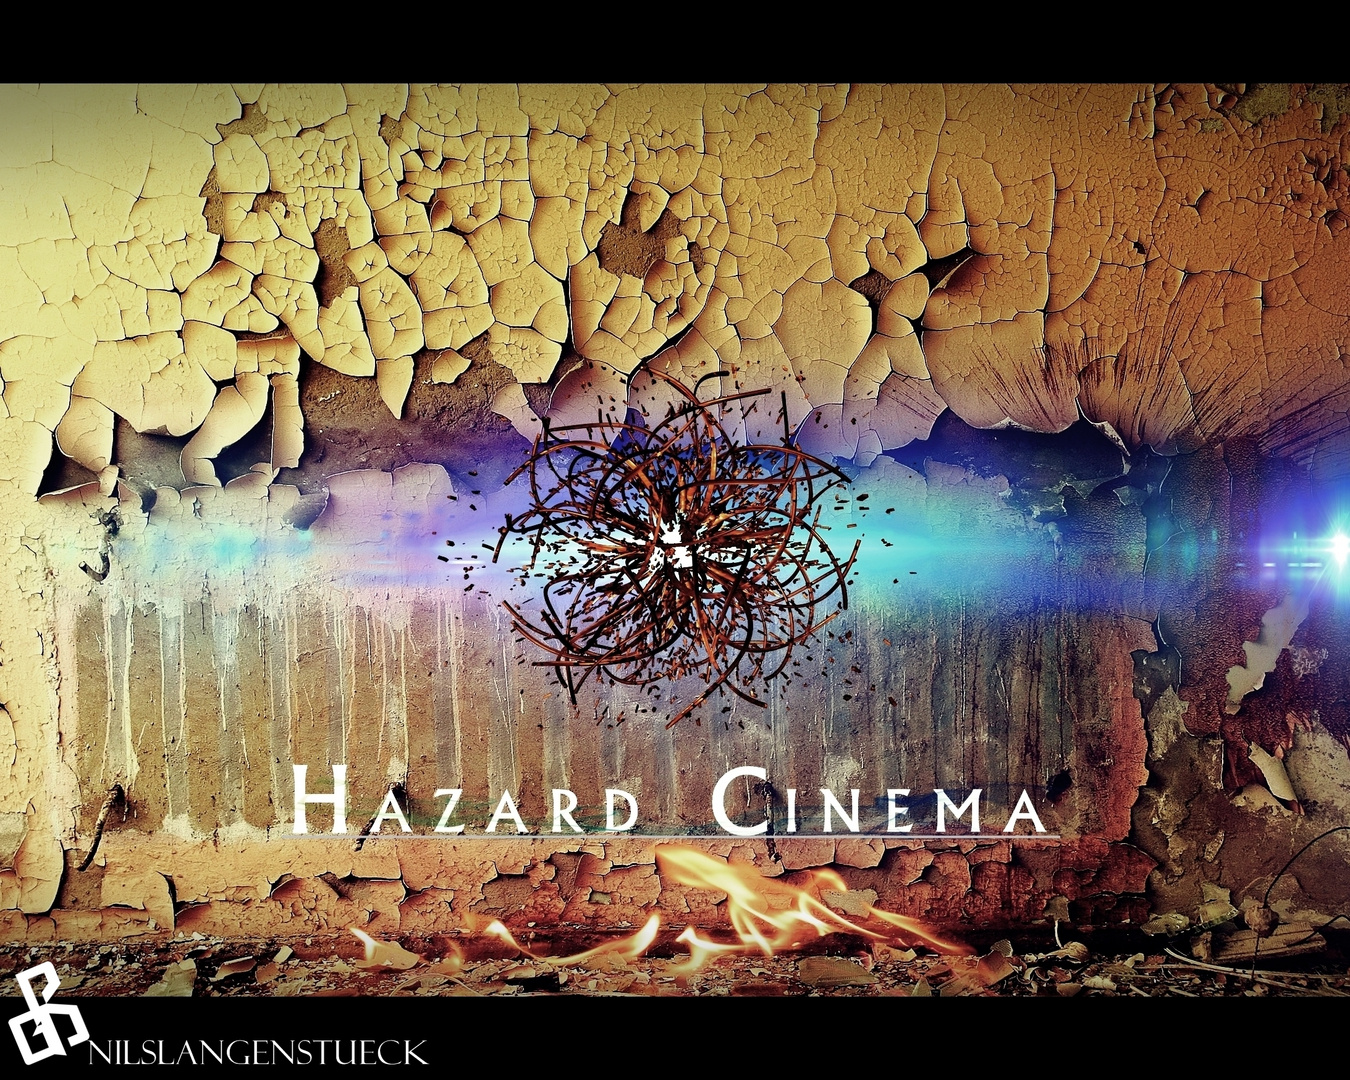 HAZARD CINEMA by PGD